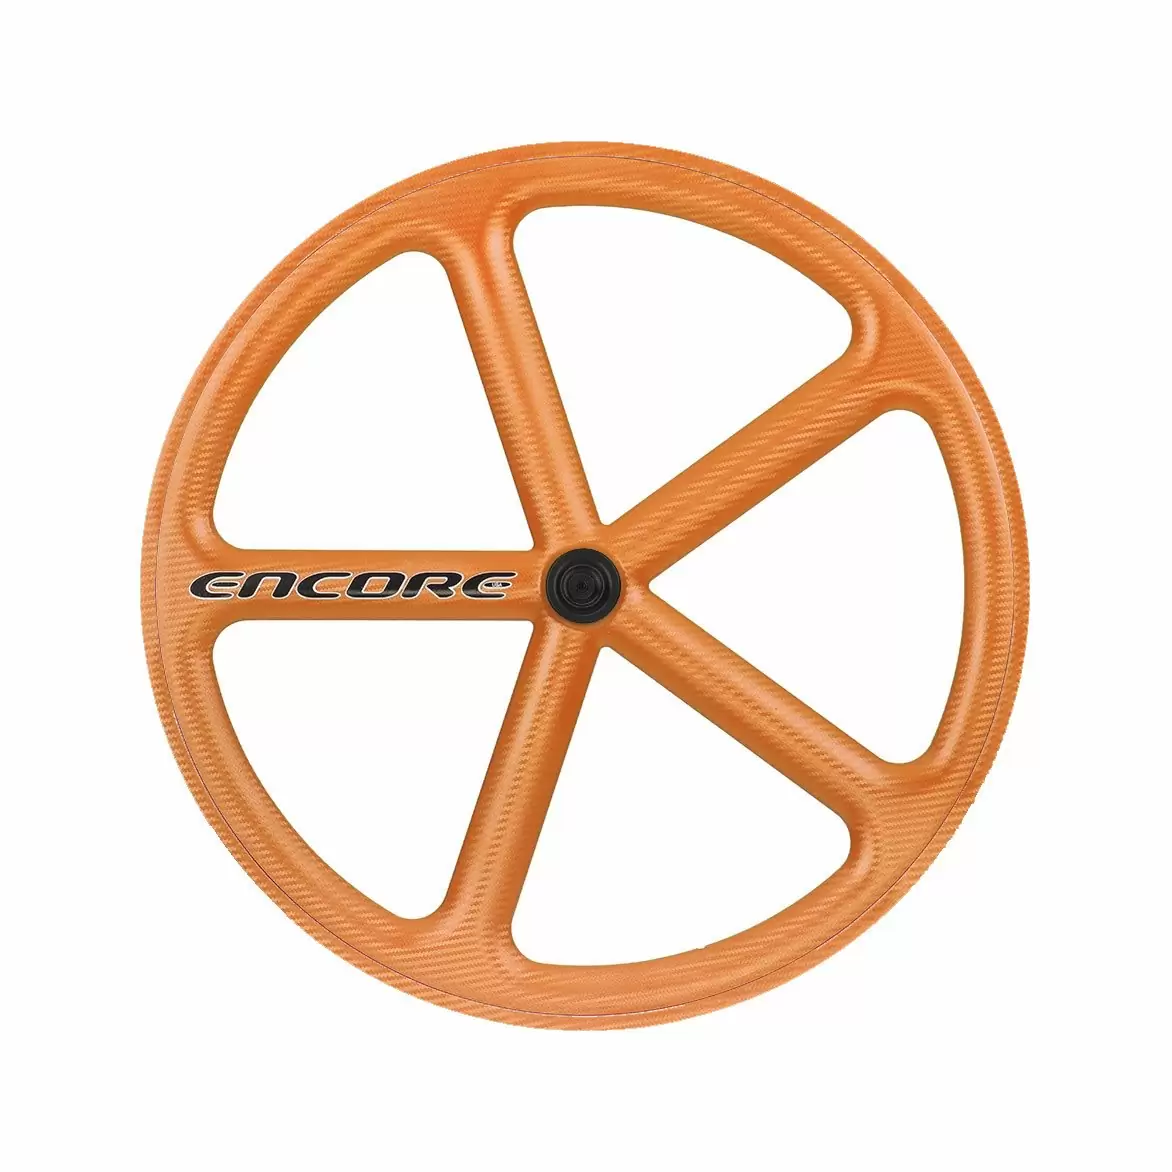 rear wheel 700c track 5 spokes carbon weave orange nmsw - image